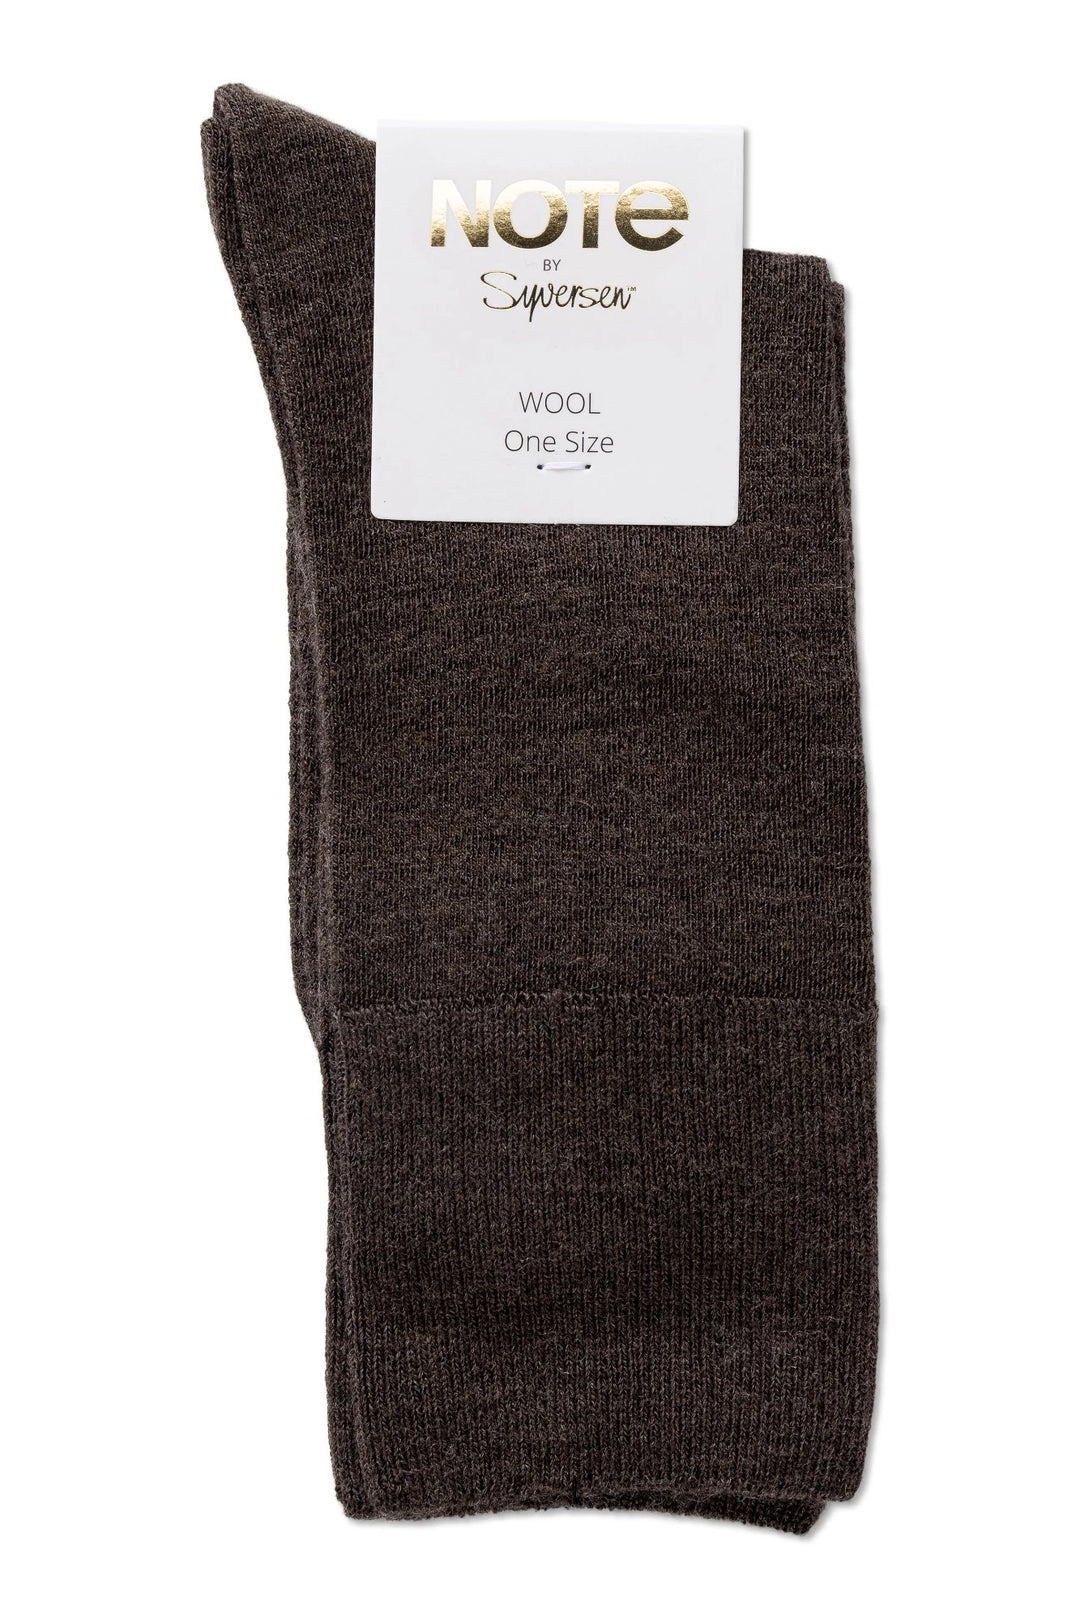 Uldstrømper | Note by Syversen Fine wool comfort top, brown melange